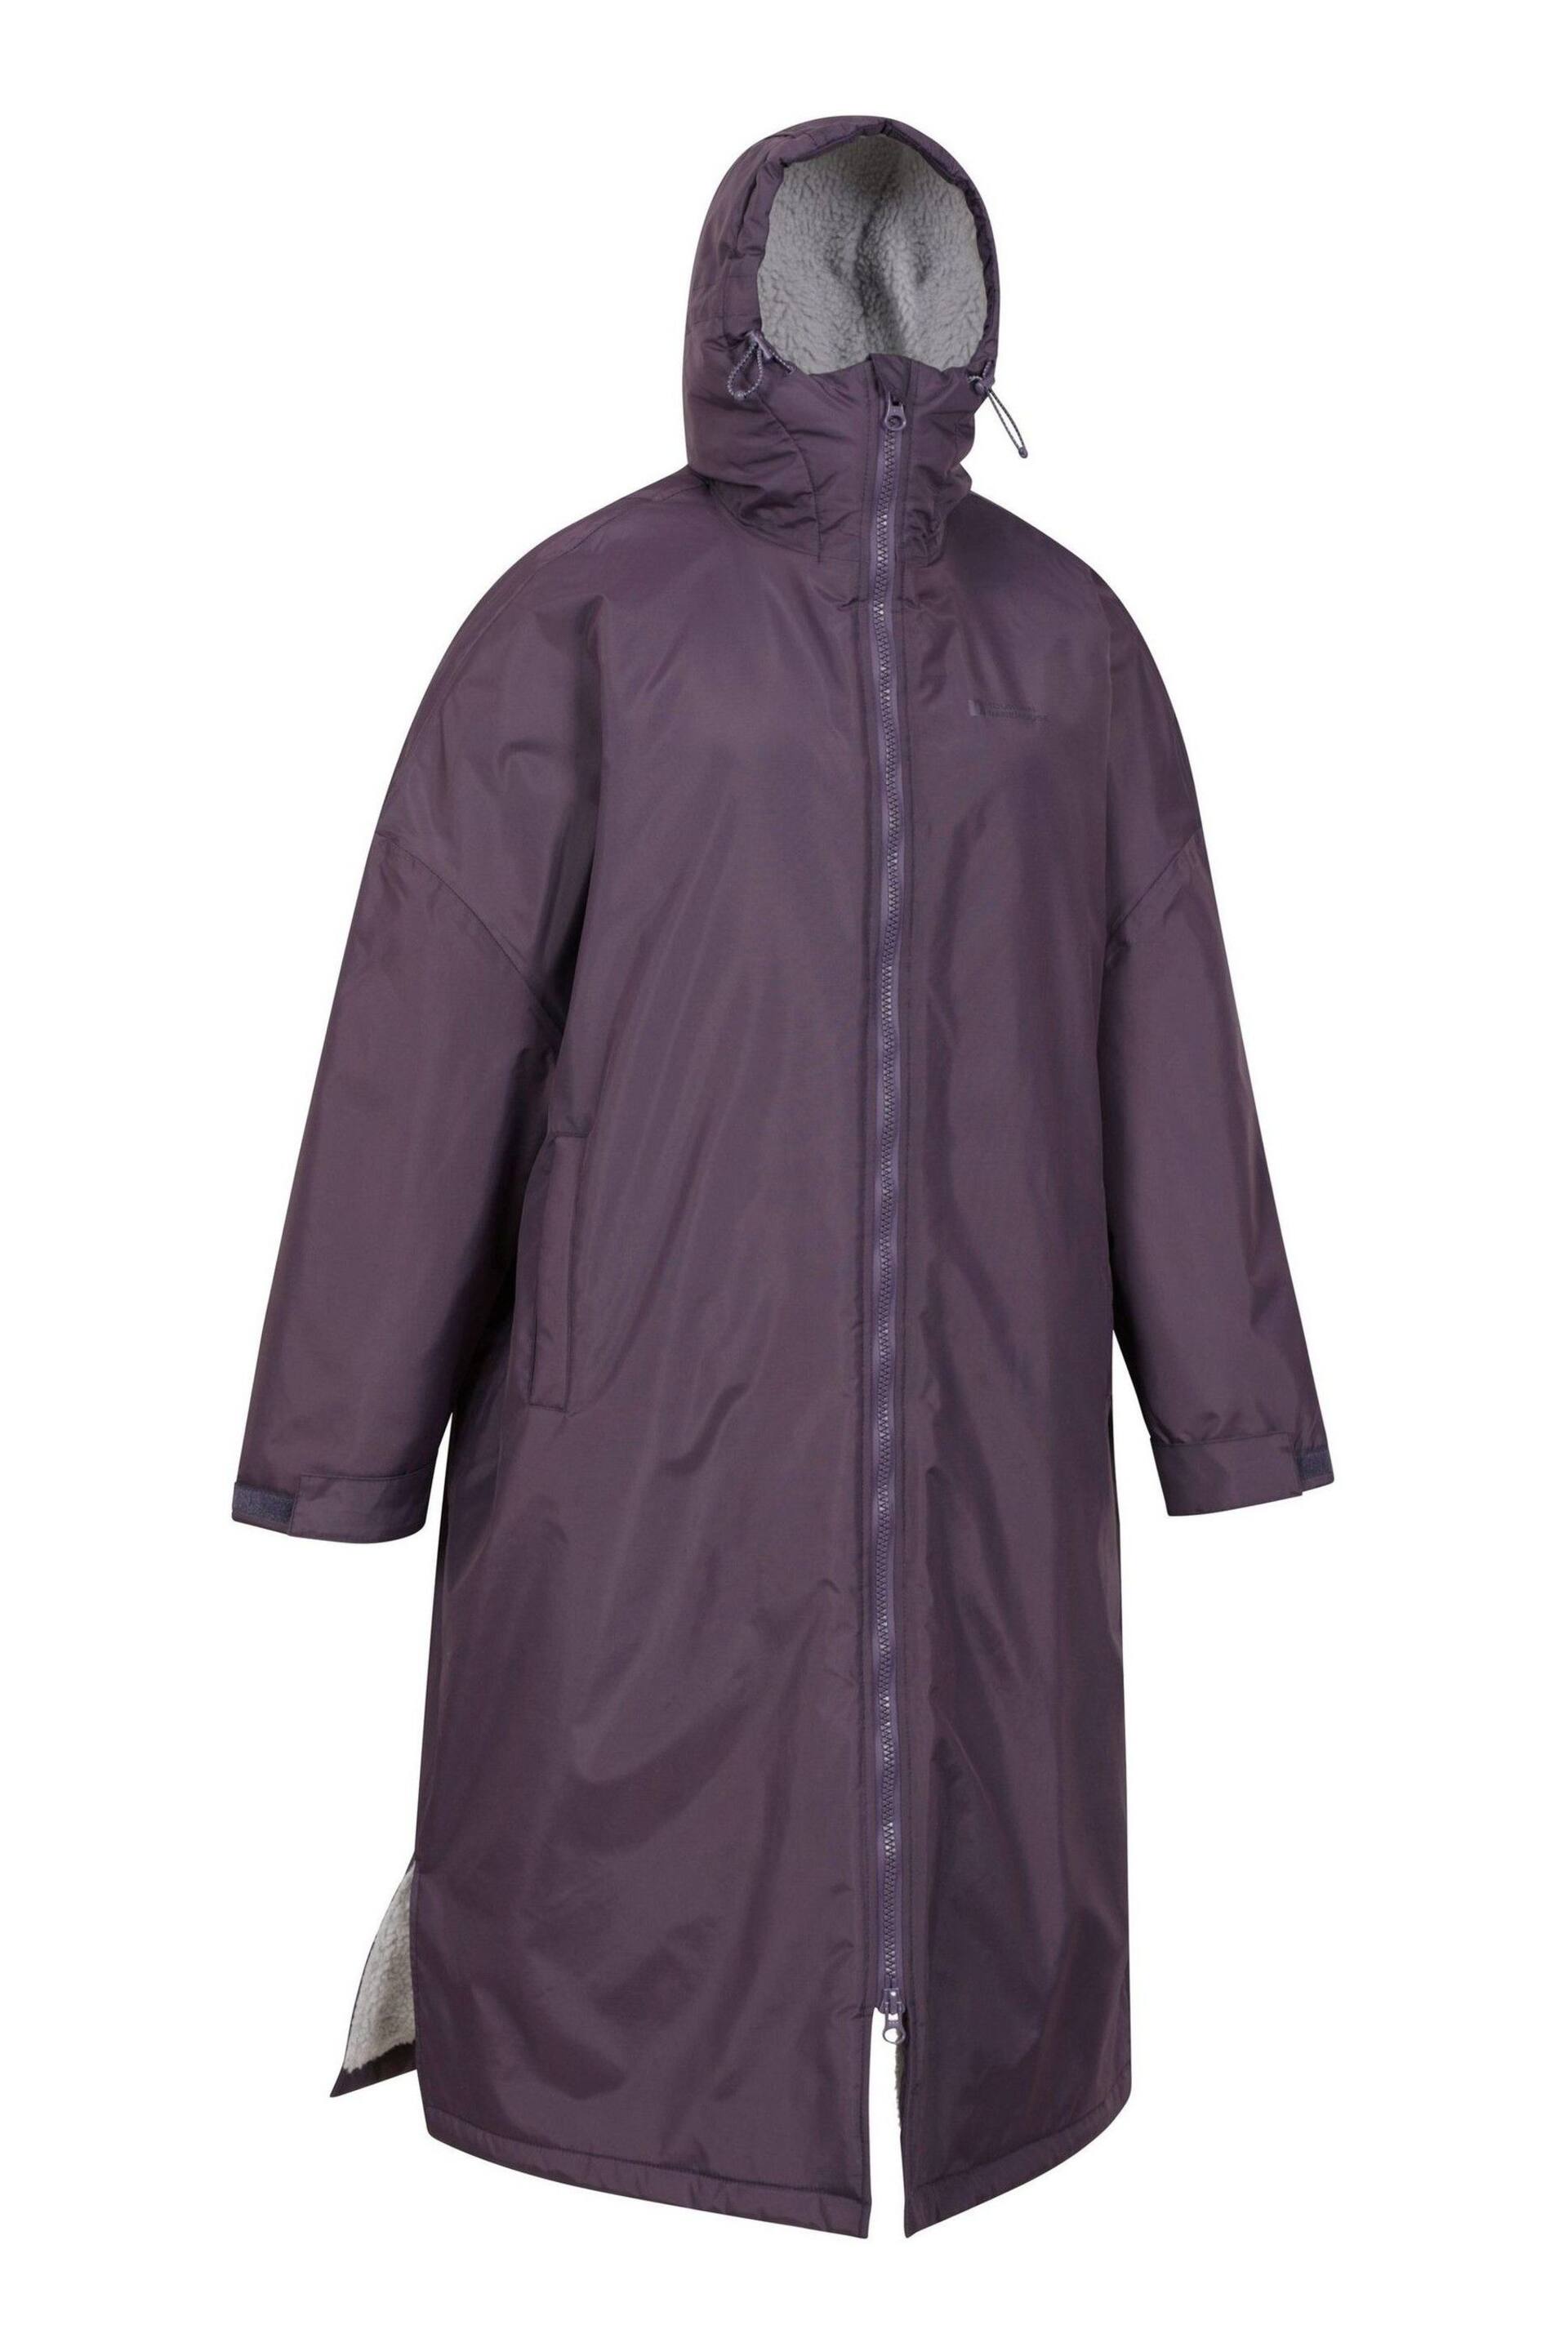 Mountain Warehouse Purple Tidal Womens Waterproof Changing Robe - Image 2 of 6